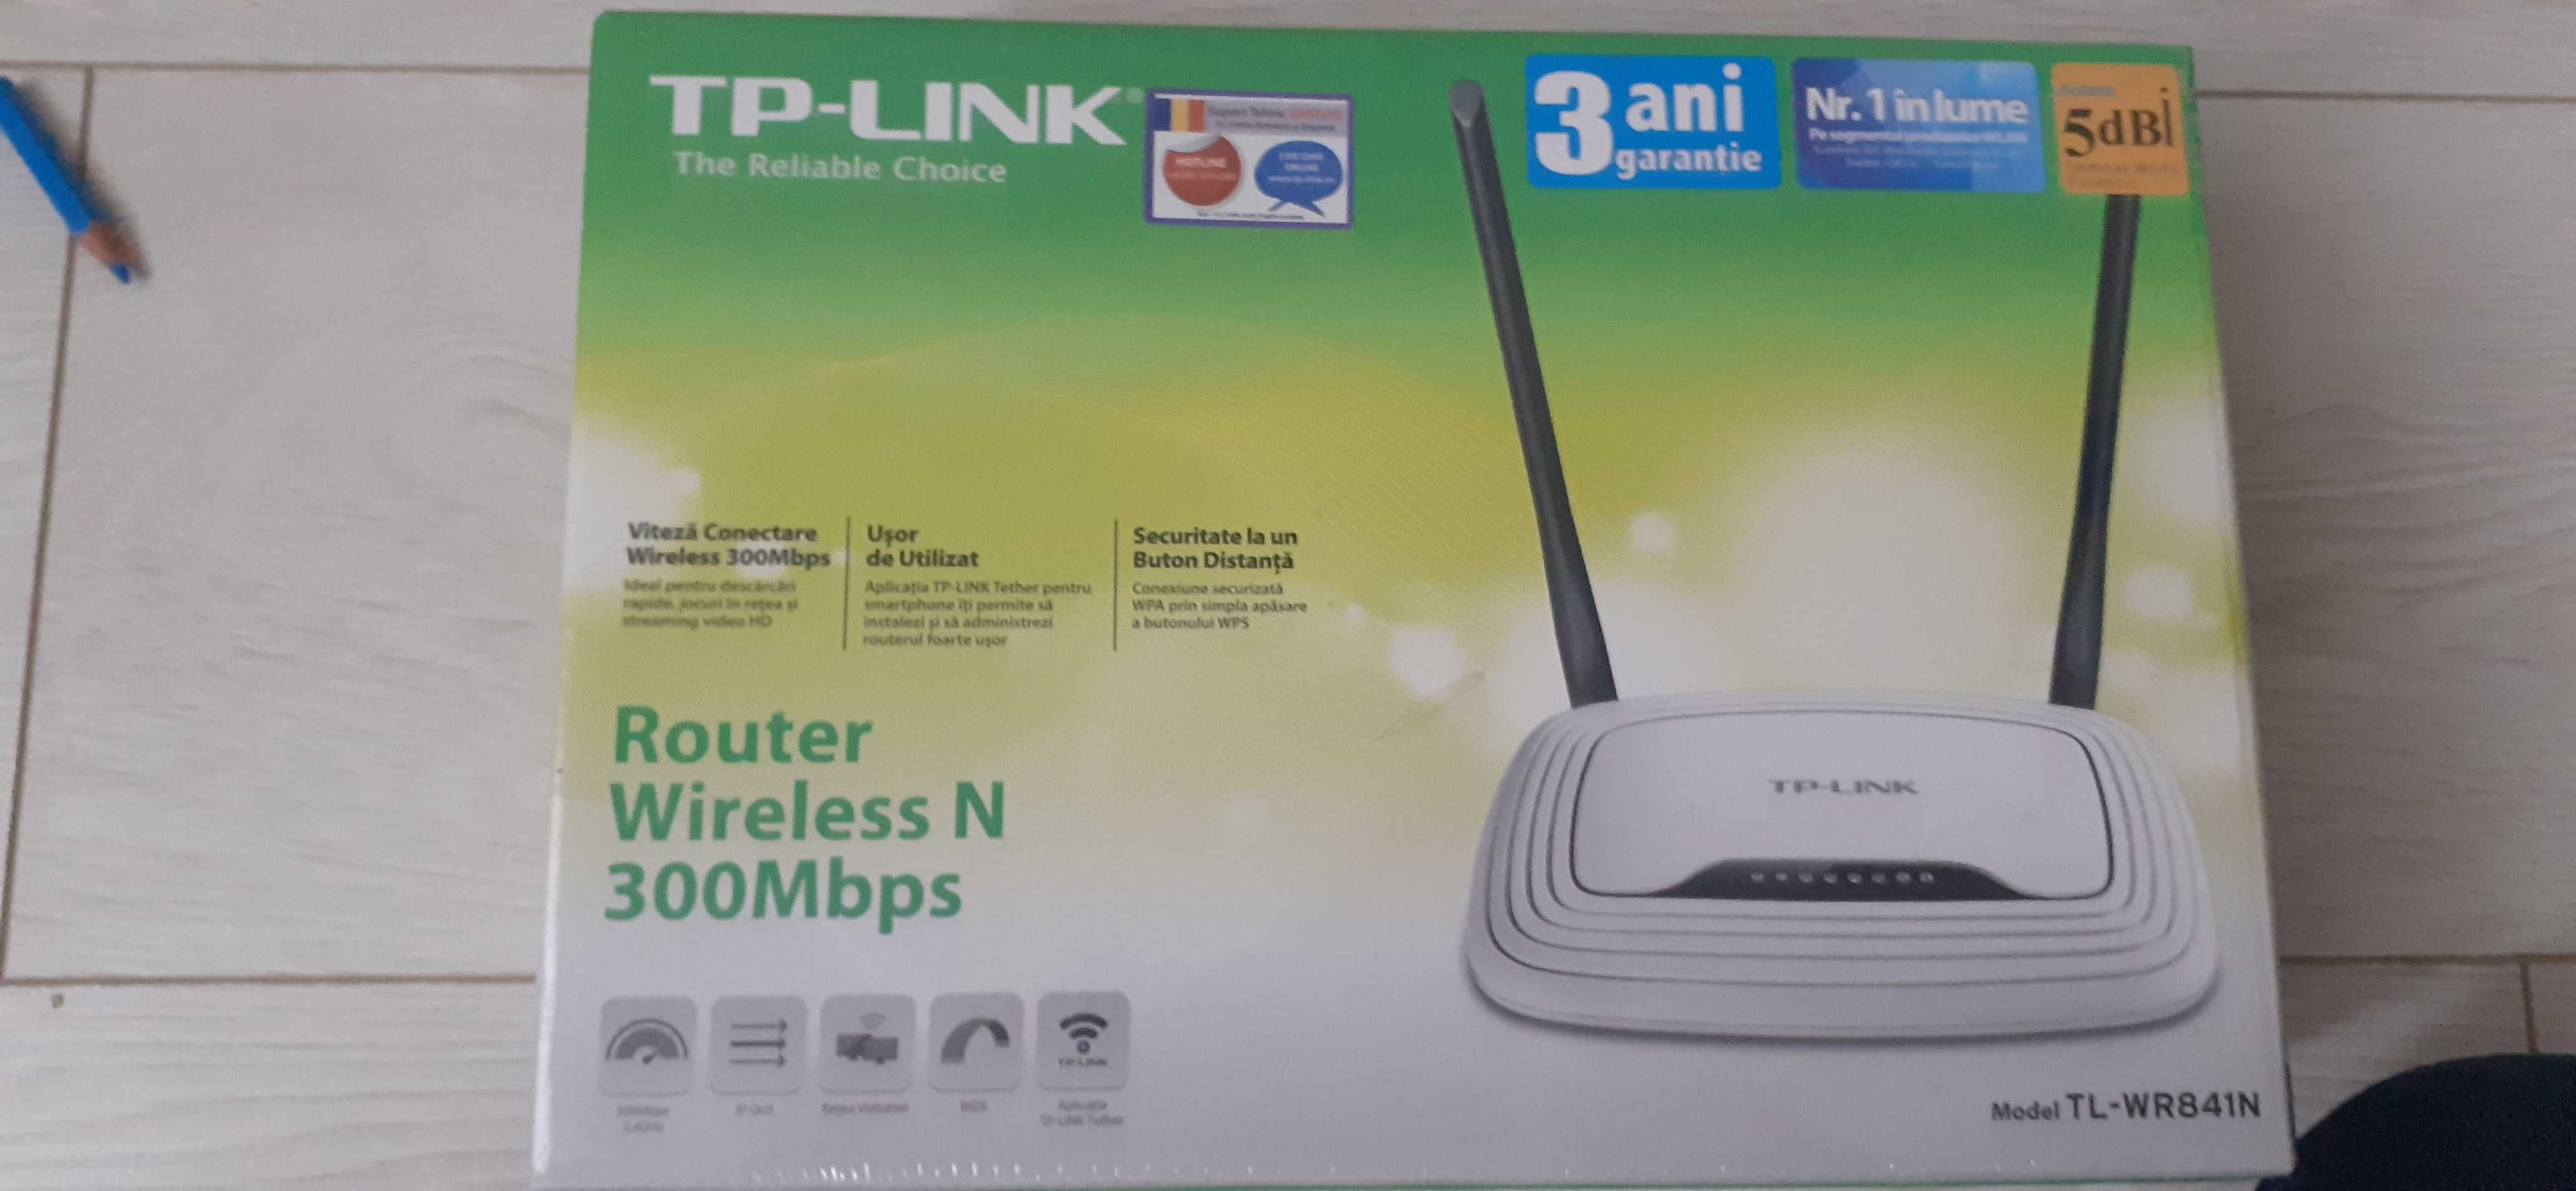 Router Wireless N 300Mbps,  Model TL-WR841N